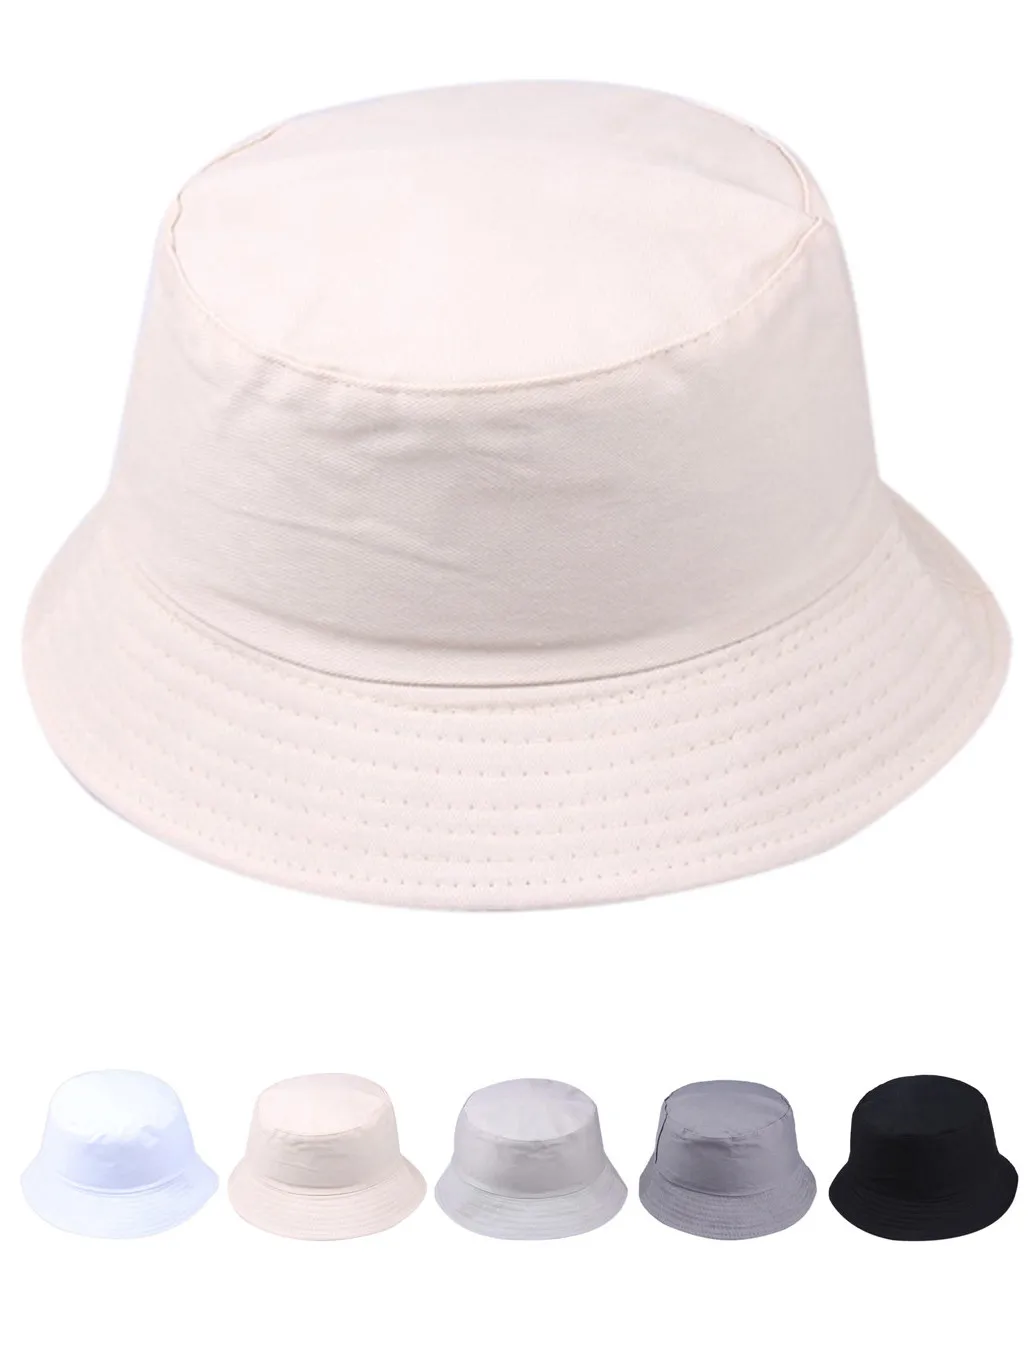 SAGACE Рыбацкая шляпа унисекс Повседневная модная уличная шляпа Солнцезащитная шляпа для взрослых однотонная бейсбольная шляпа хлопковая летняя зимняя шапка Рыбацкая шляпа